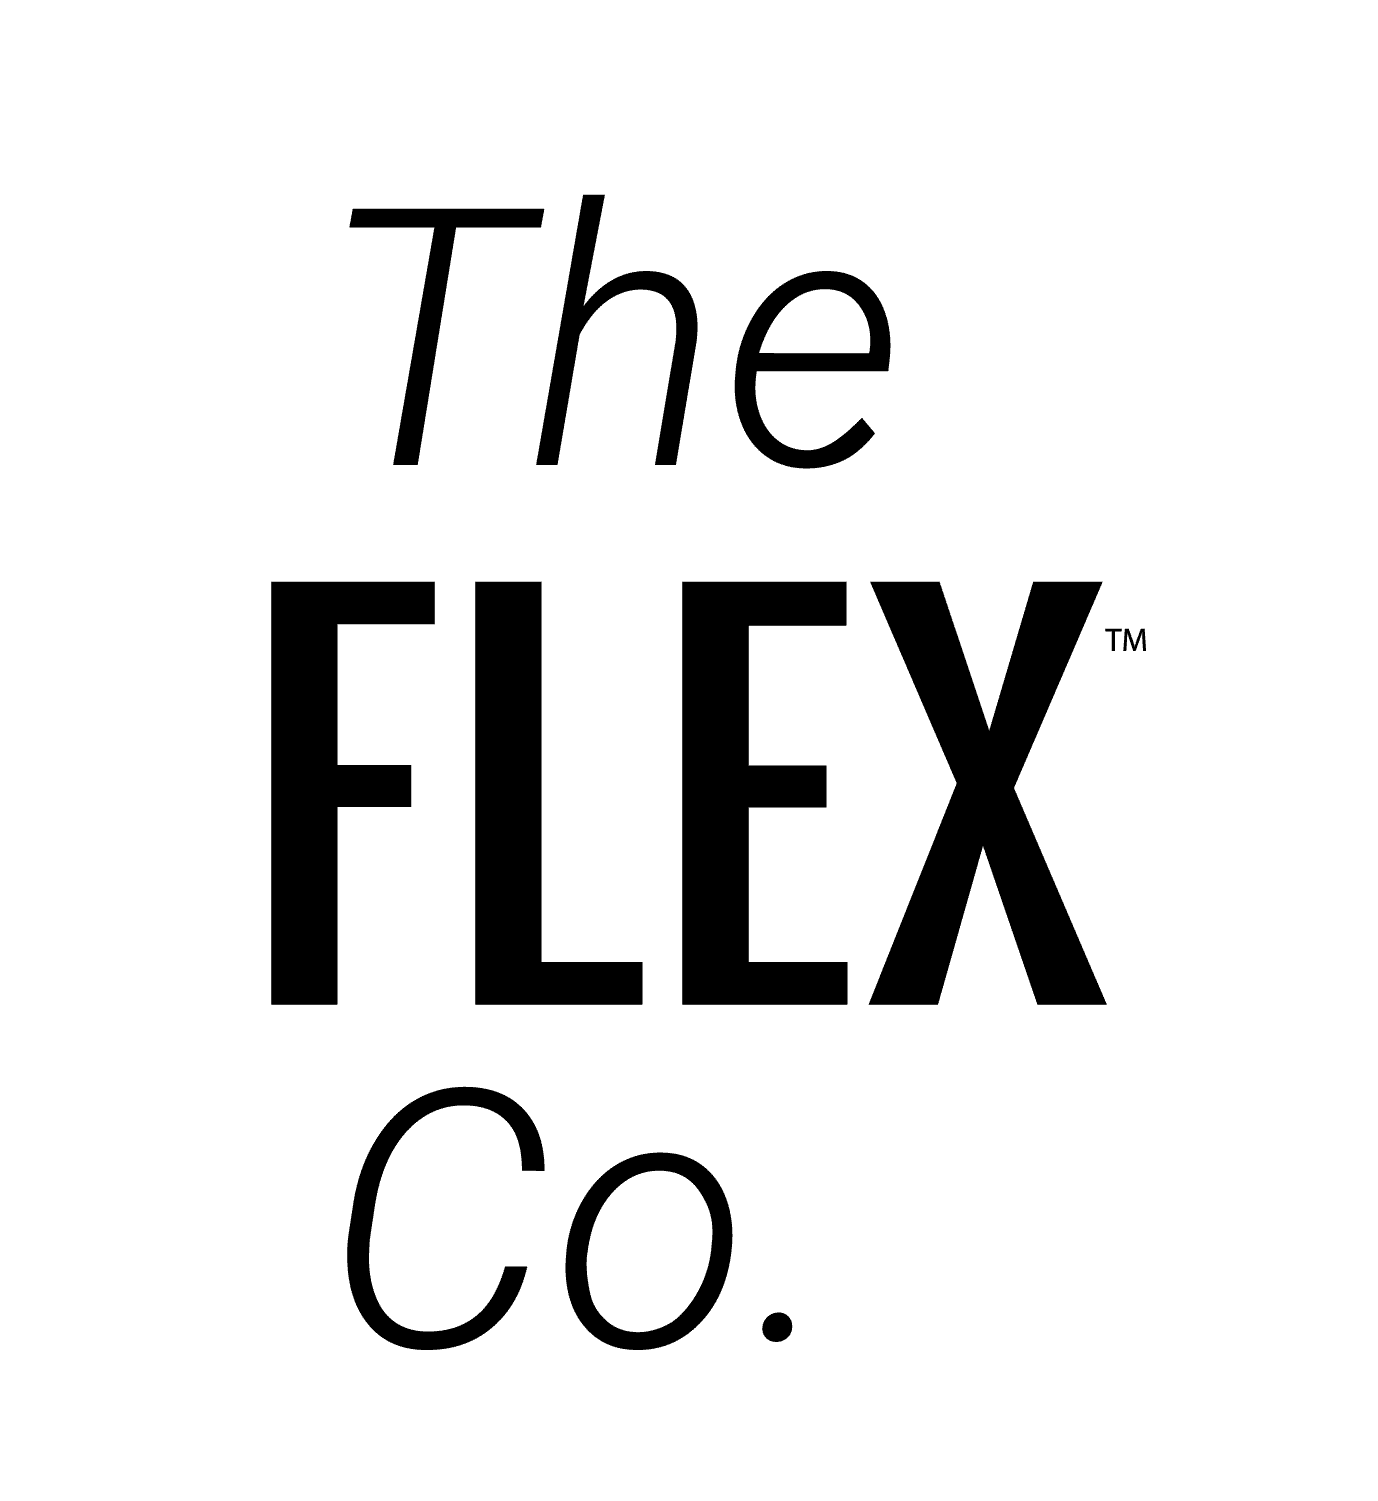 The FLEXX